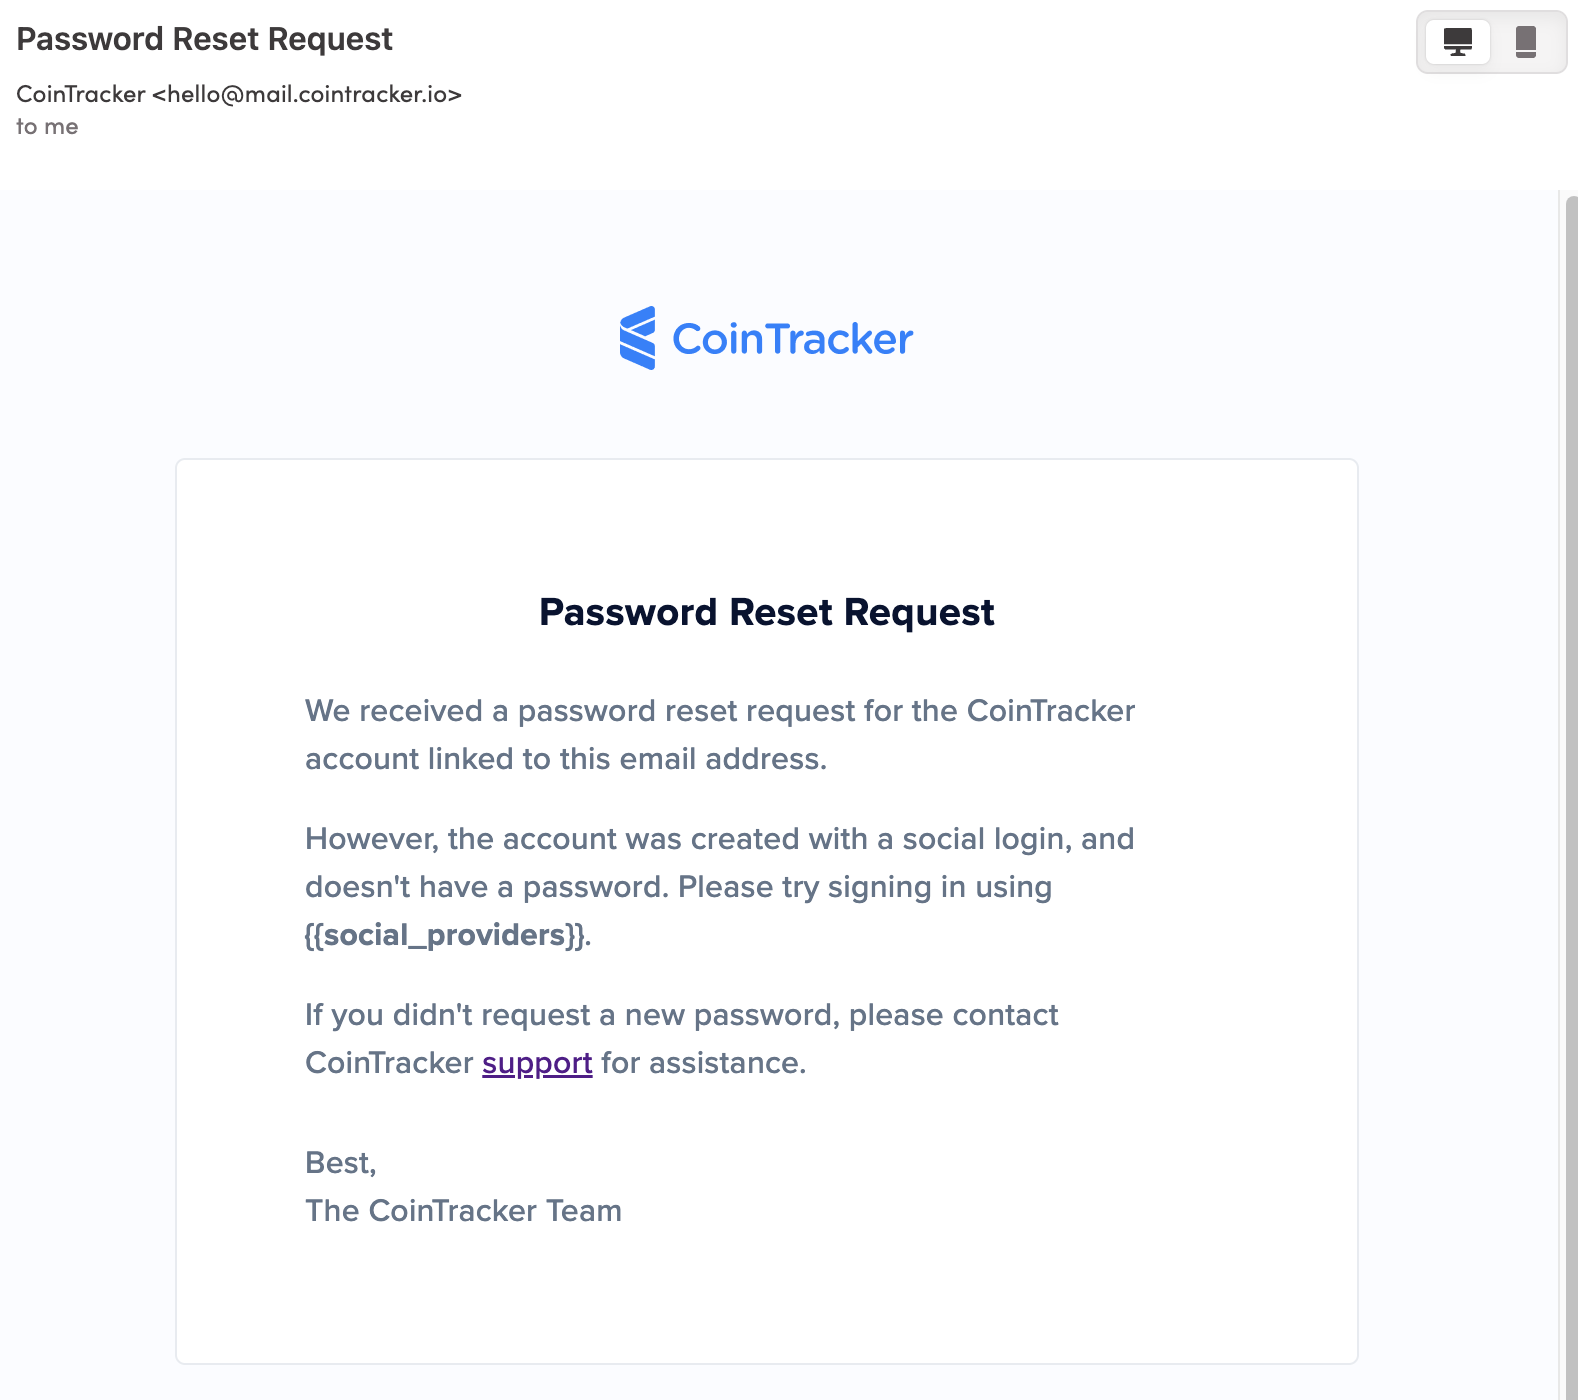 password_reset_request_image.png